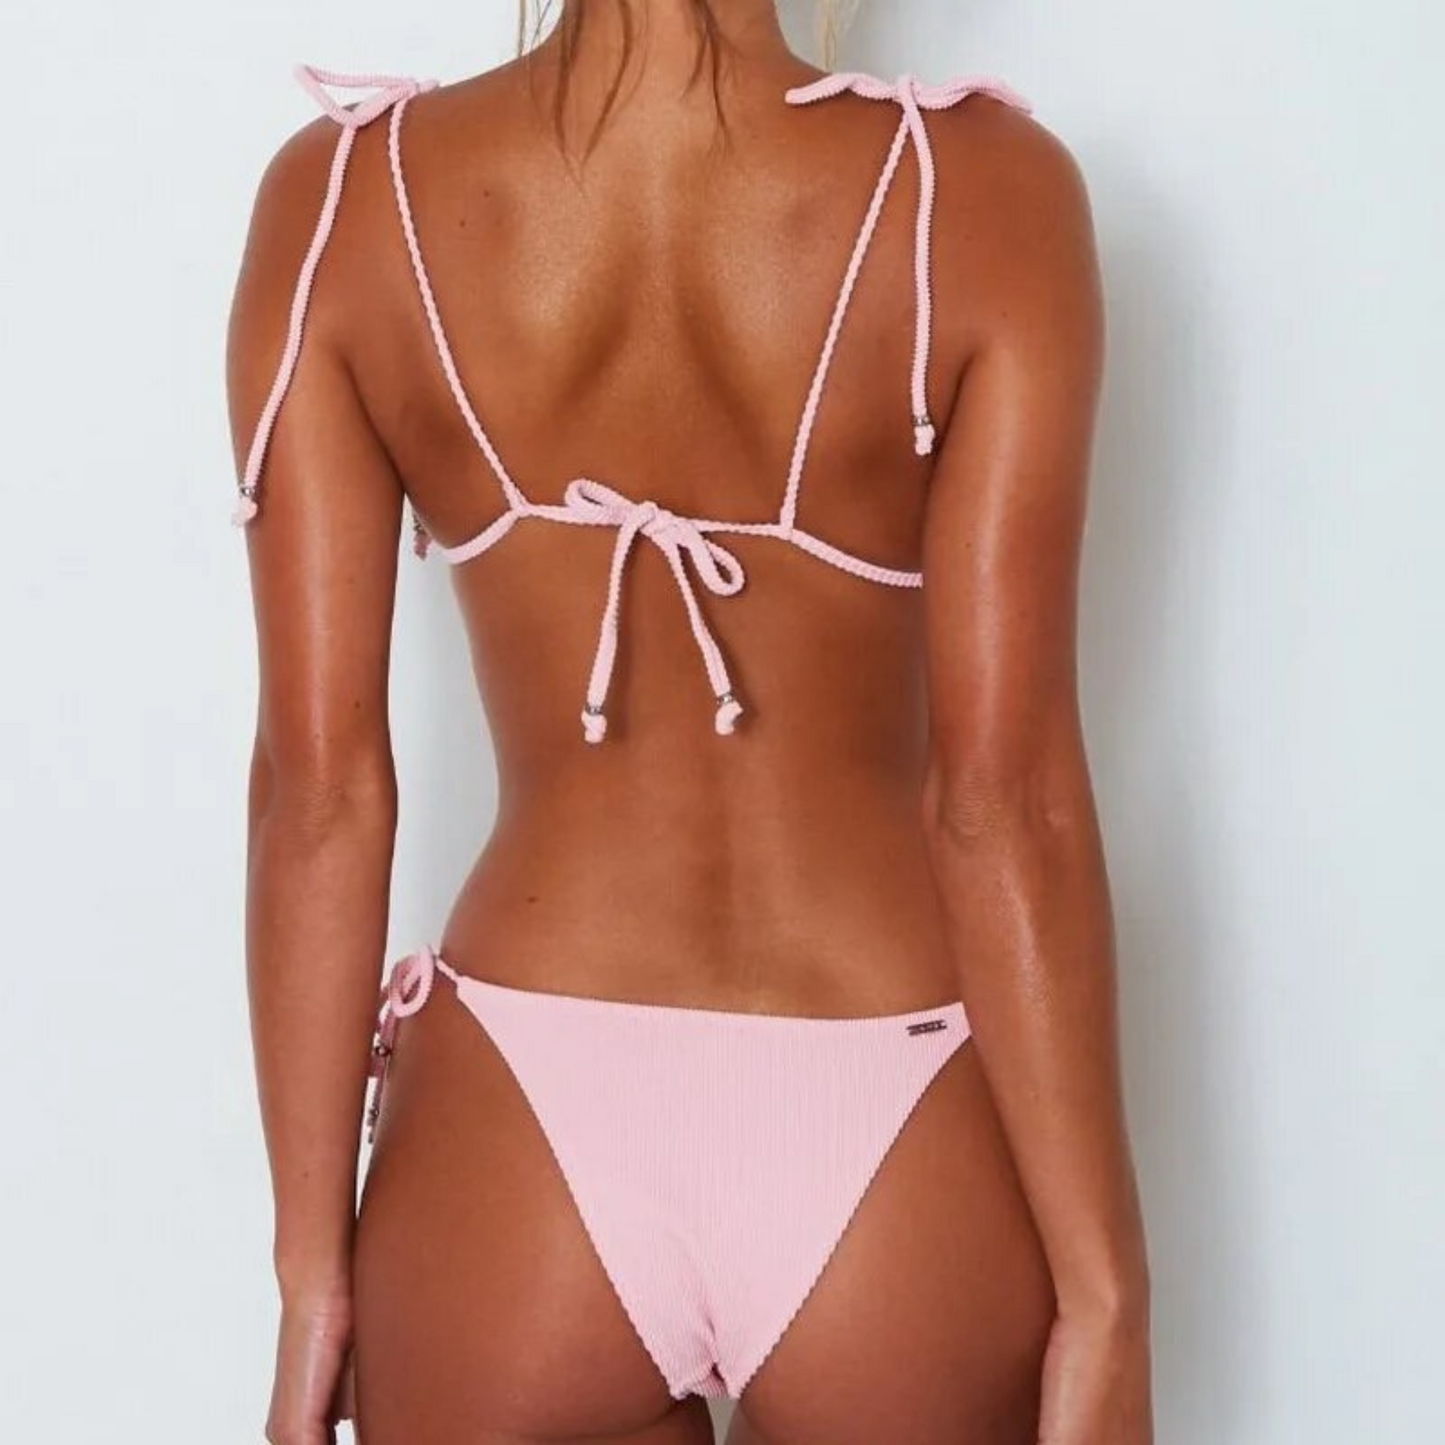 White Sexy String Bikini